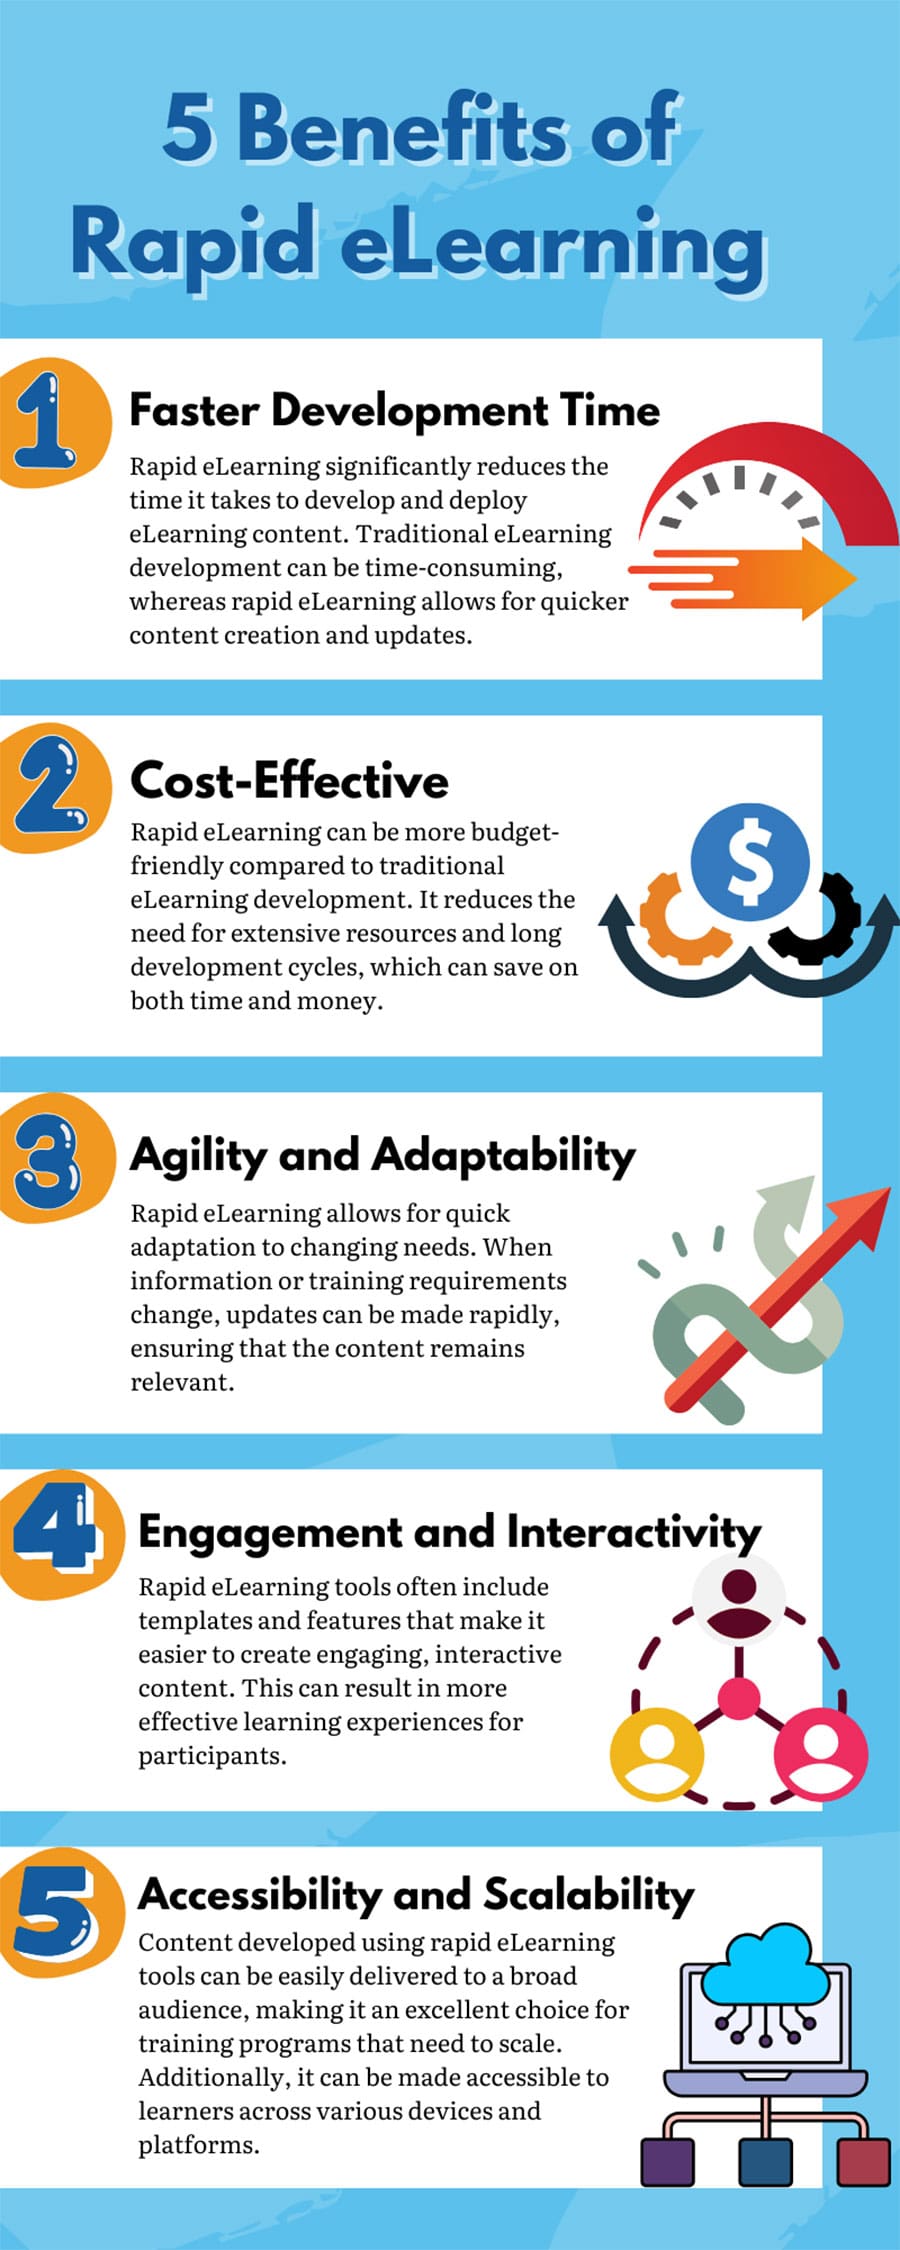 5 Benefits of Rapid eLearning